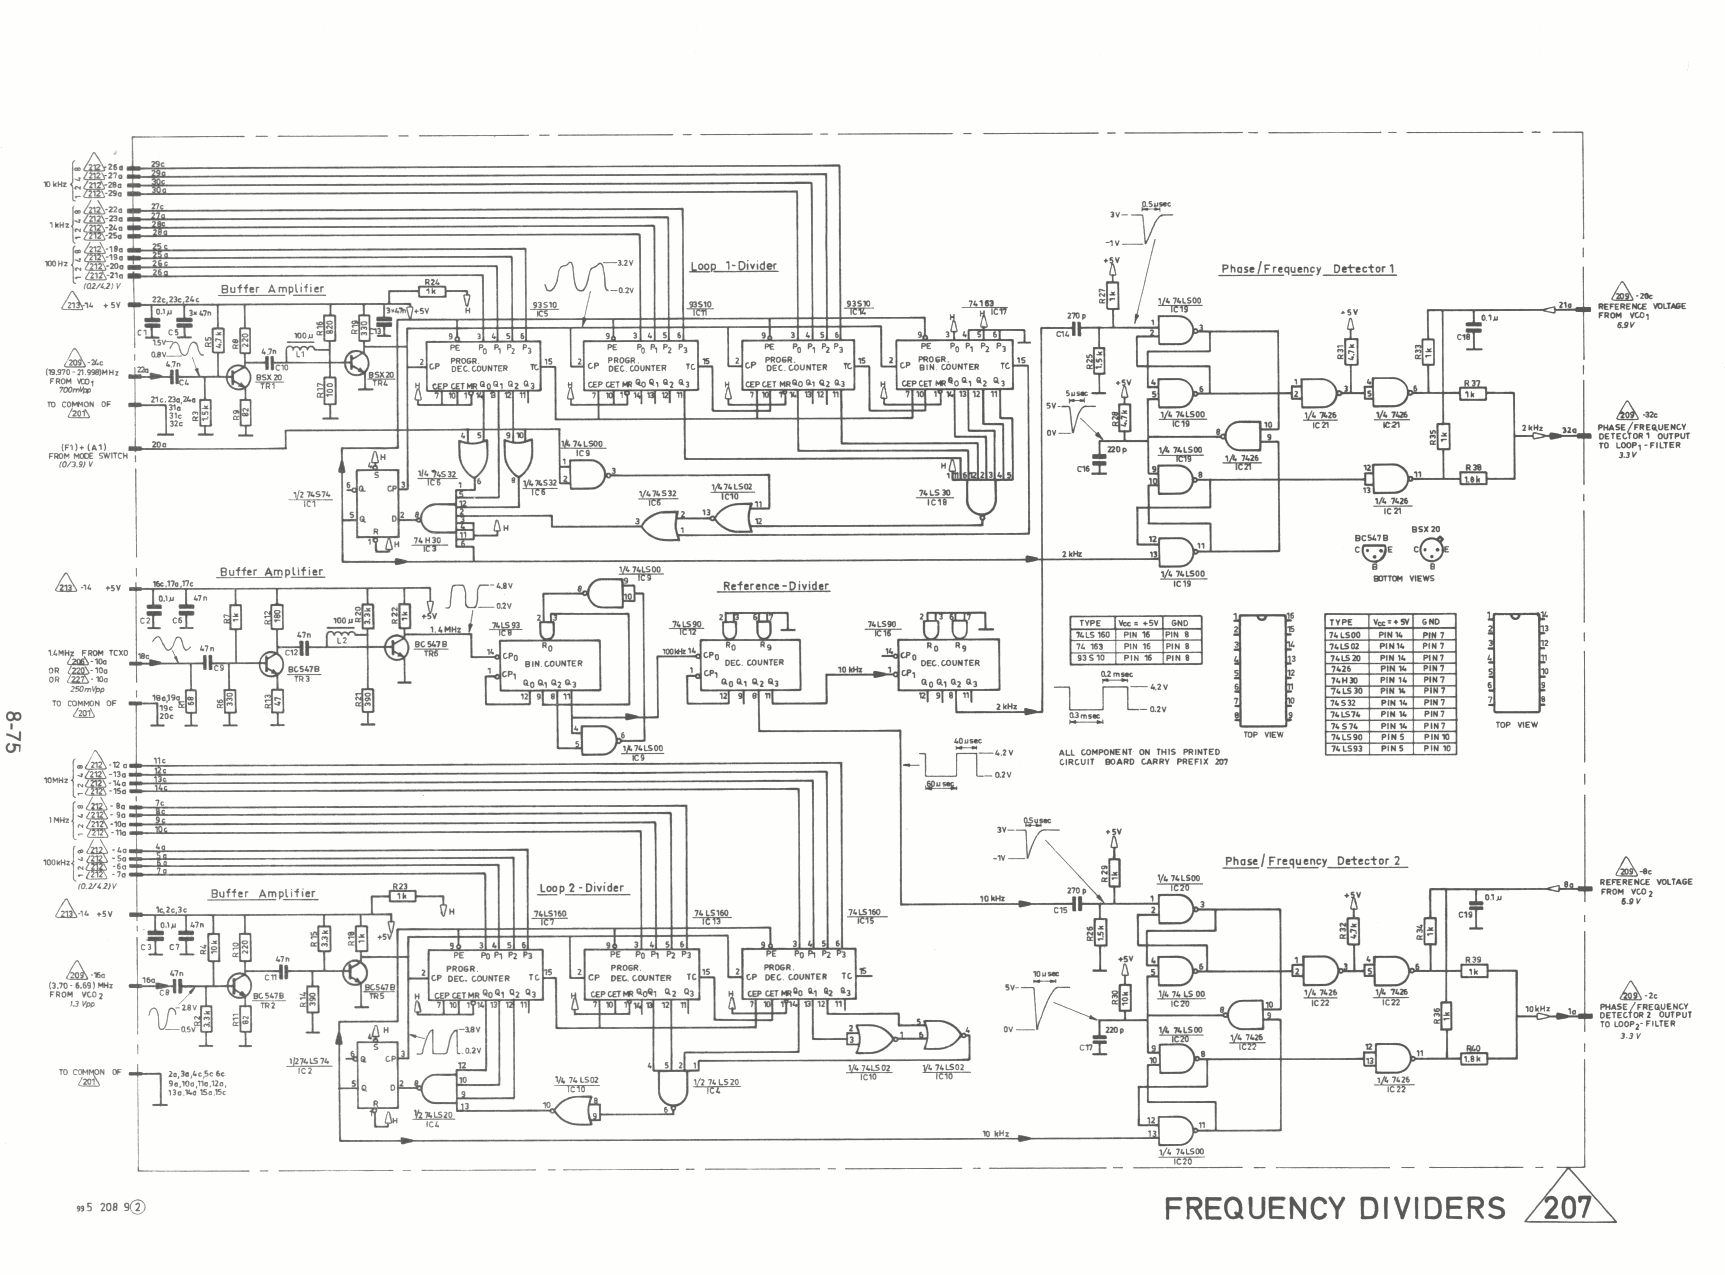 Skanti HF Frequency_dividers diagram 207